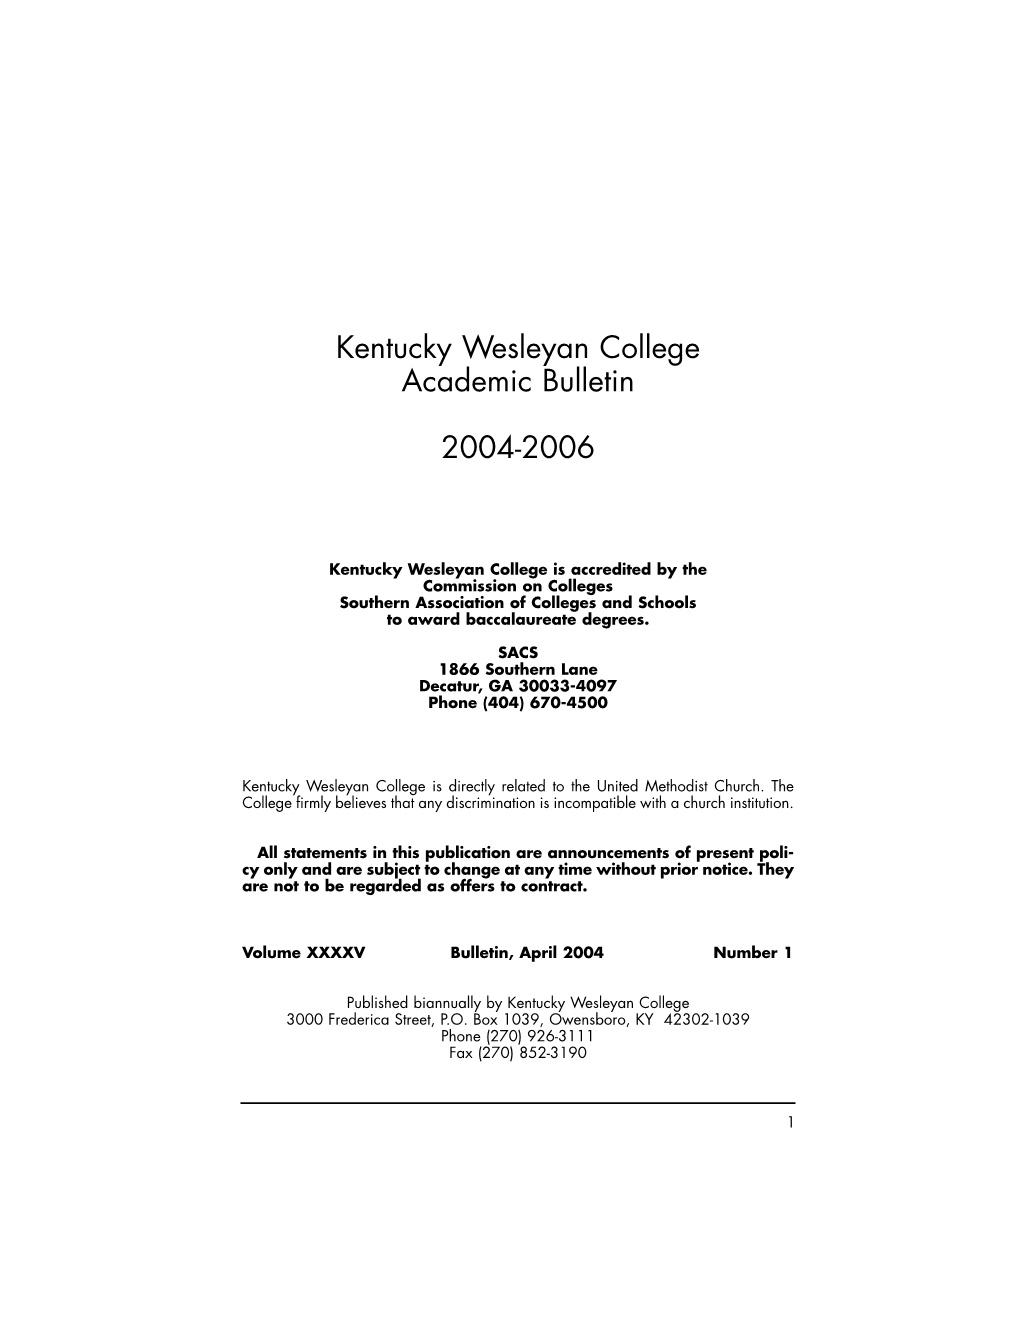 Kentucky Wesleyan College Academic Bulletin 2004-2006